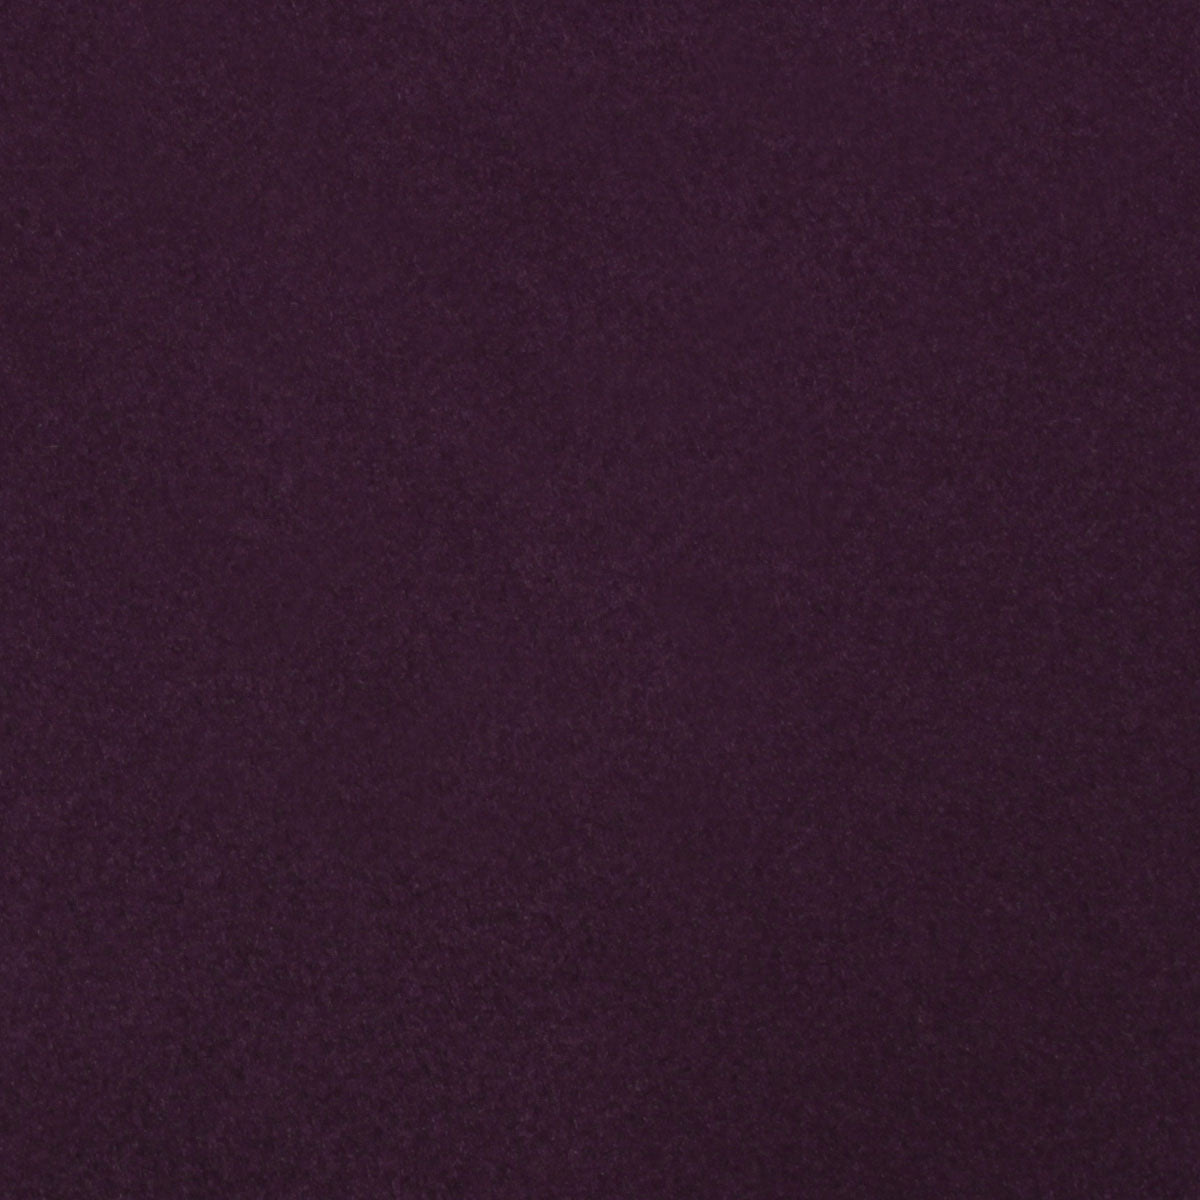 Plum Purple Velvet Fabric Skinny Tie